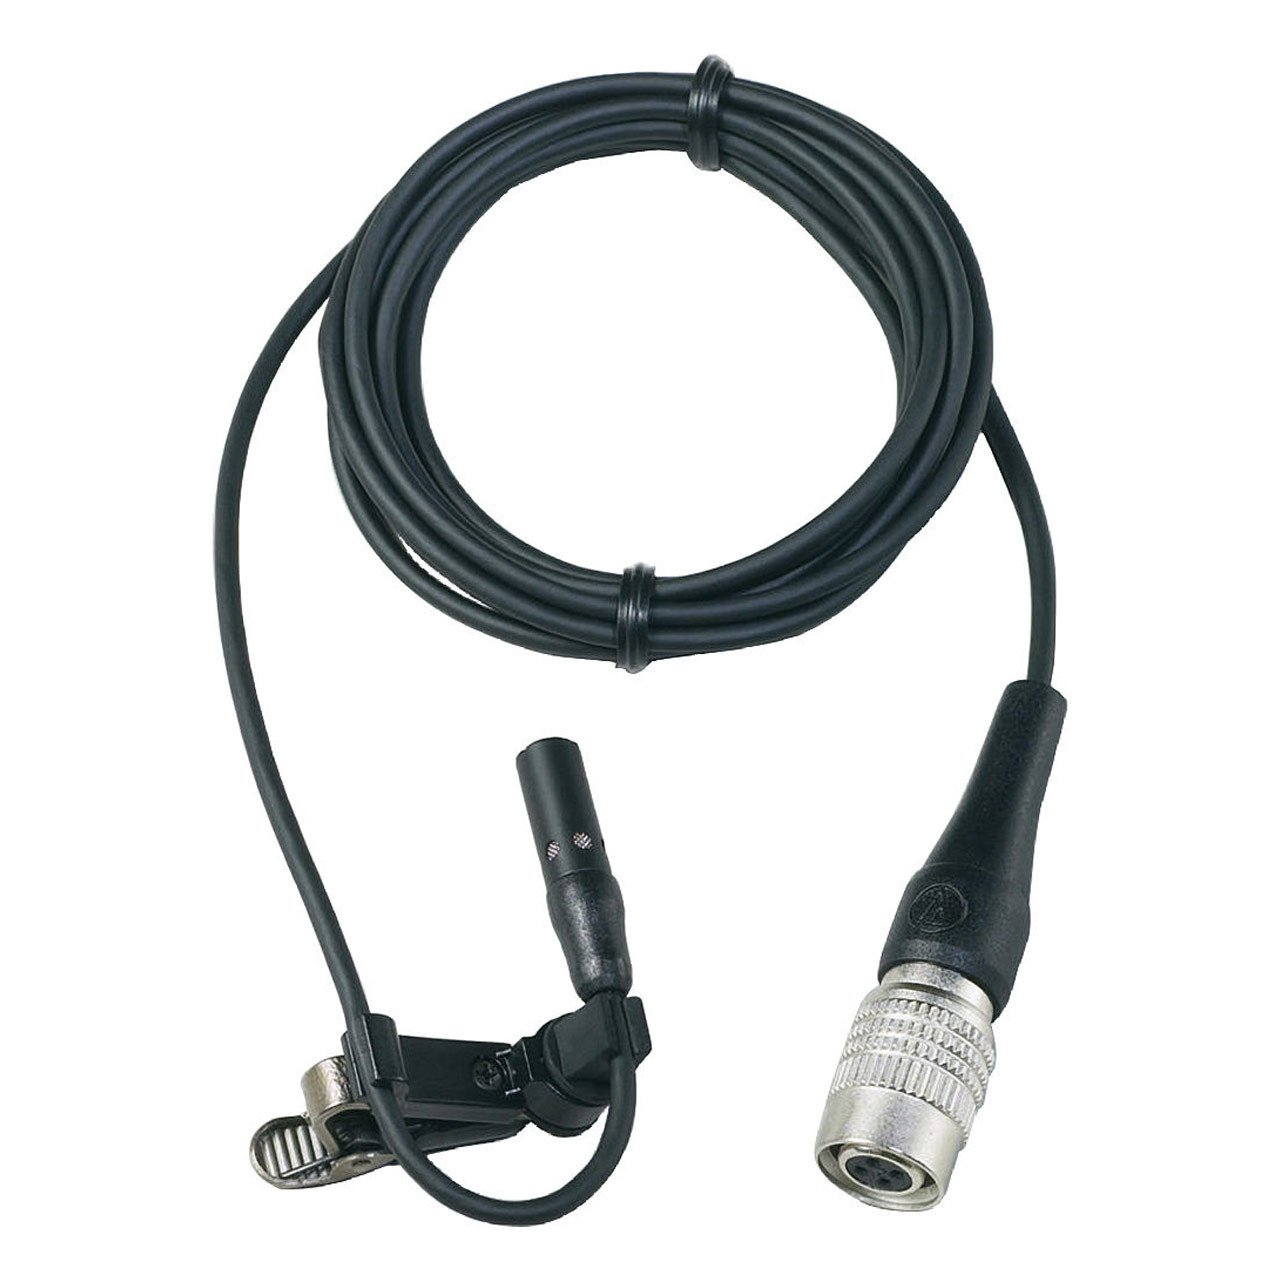 Lapel Microphones - Audio-Technica AT898cW Subminiature Cardioid Lavalier Microphone